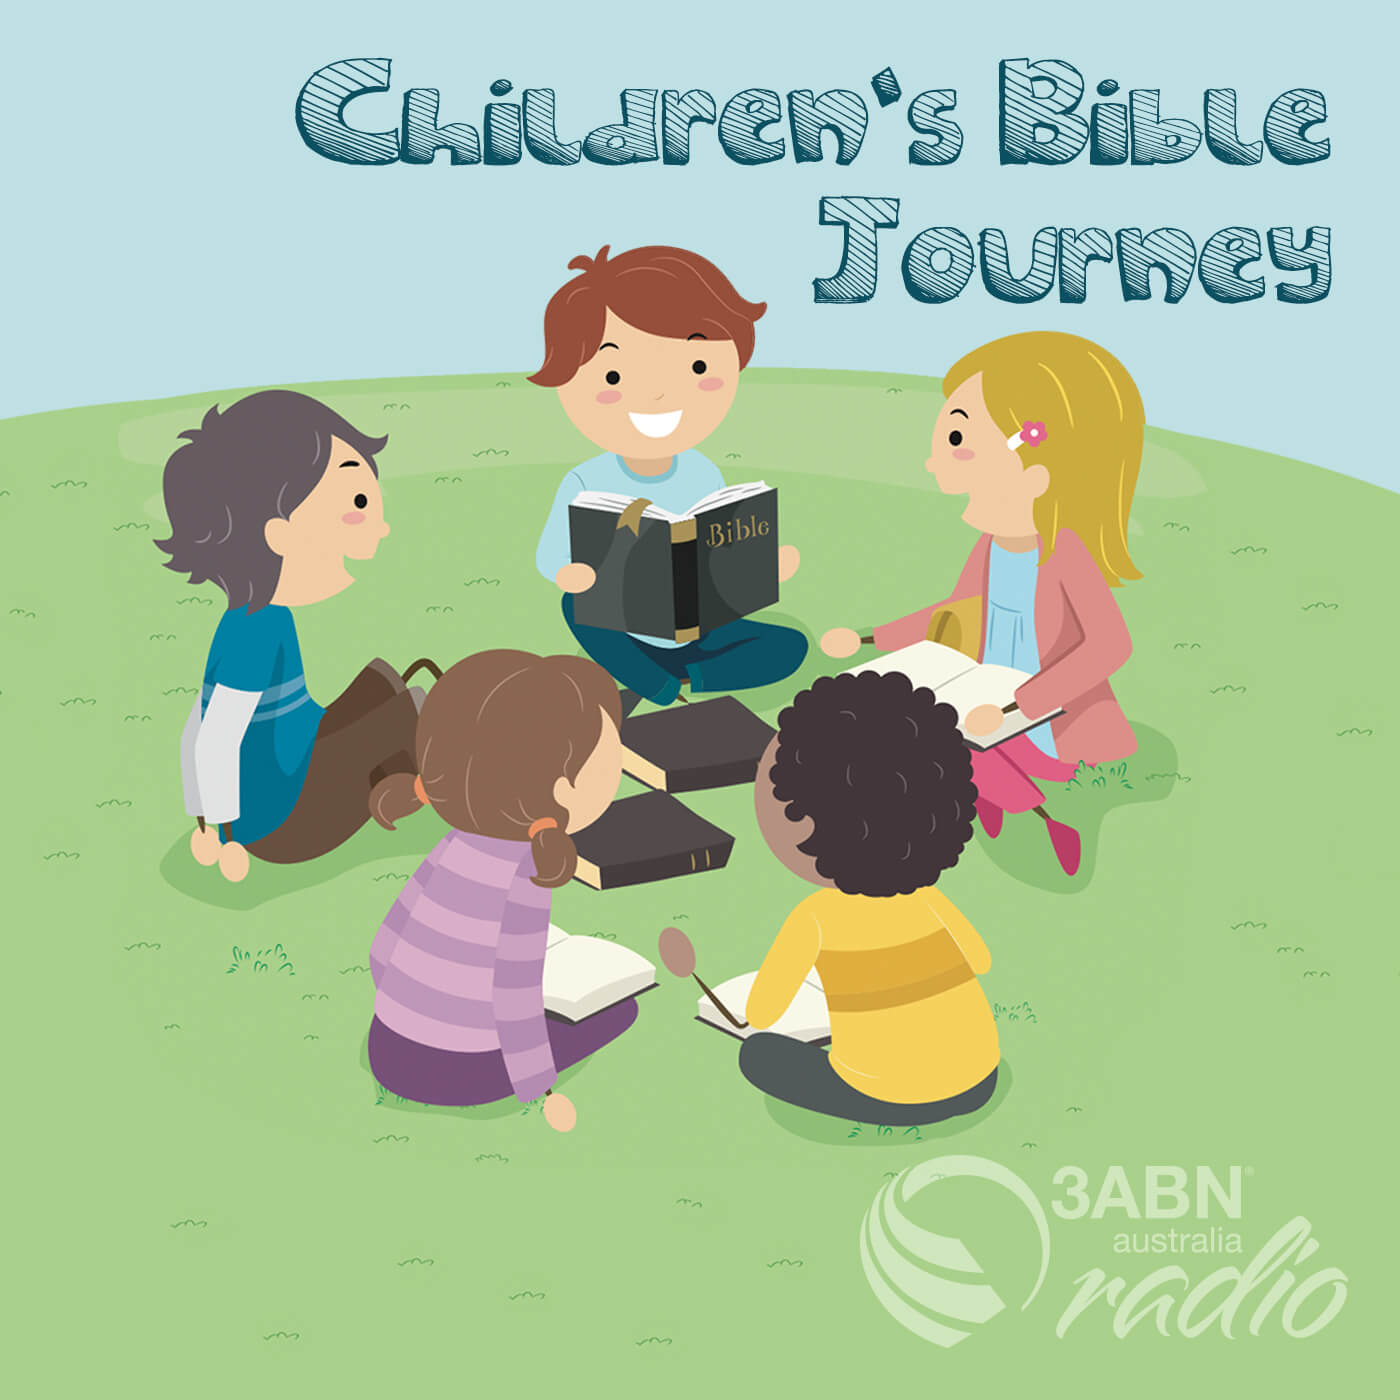 Children's Bible Journey - 2202